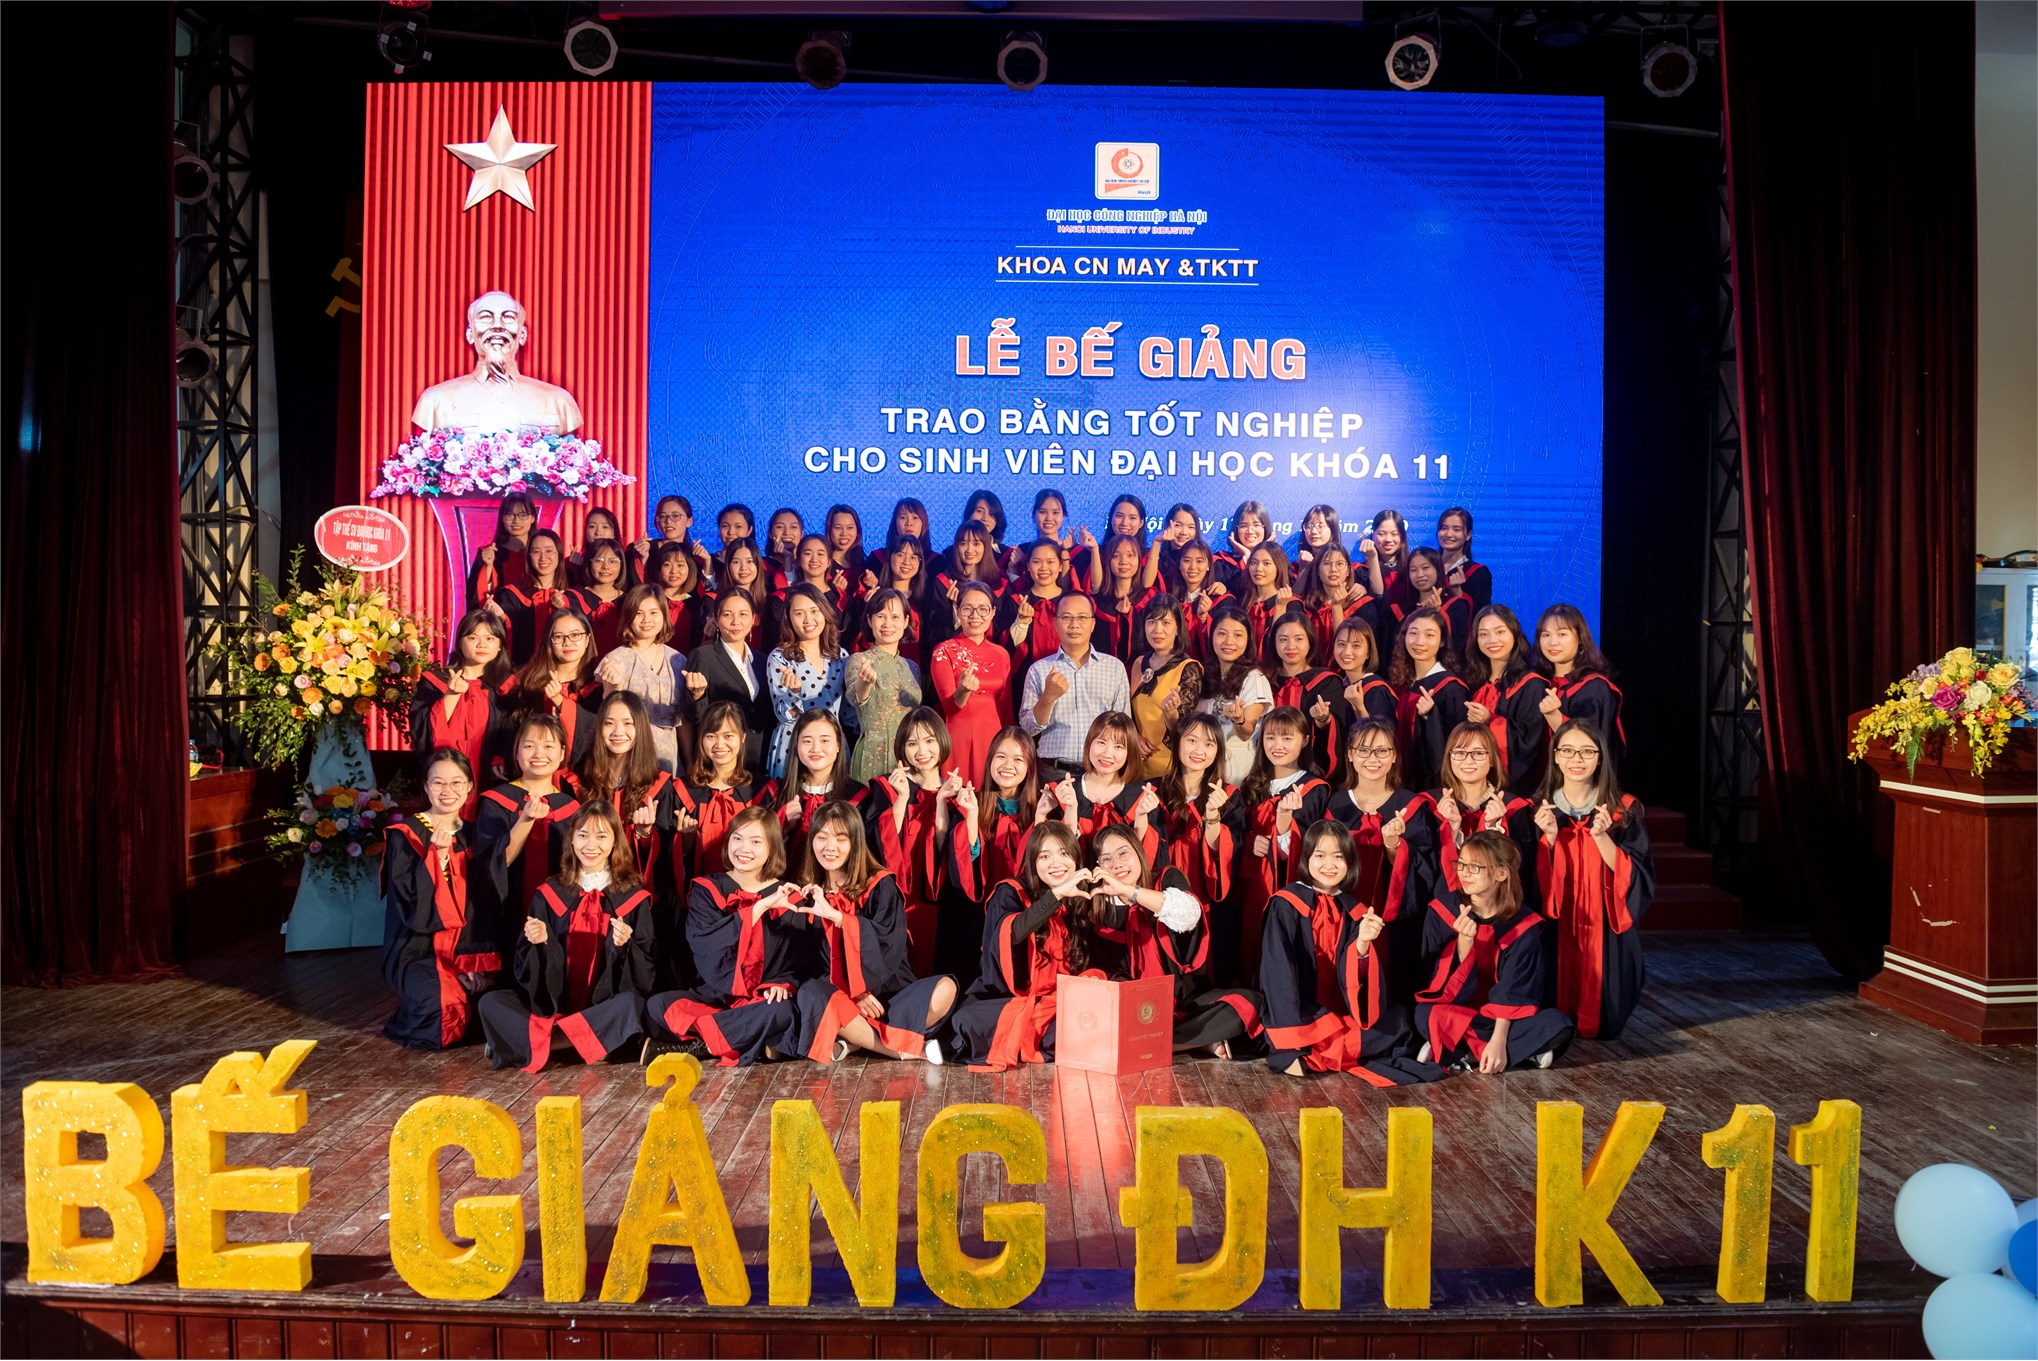 HaUI held the Graduation Ceremony & Degree Awarding Ceremony for 3455 Graduates of 2020